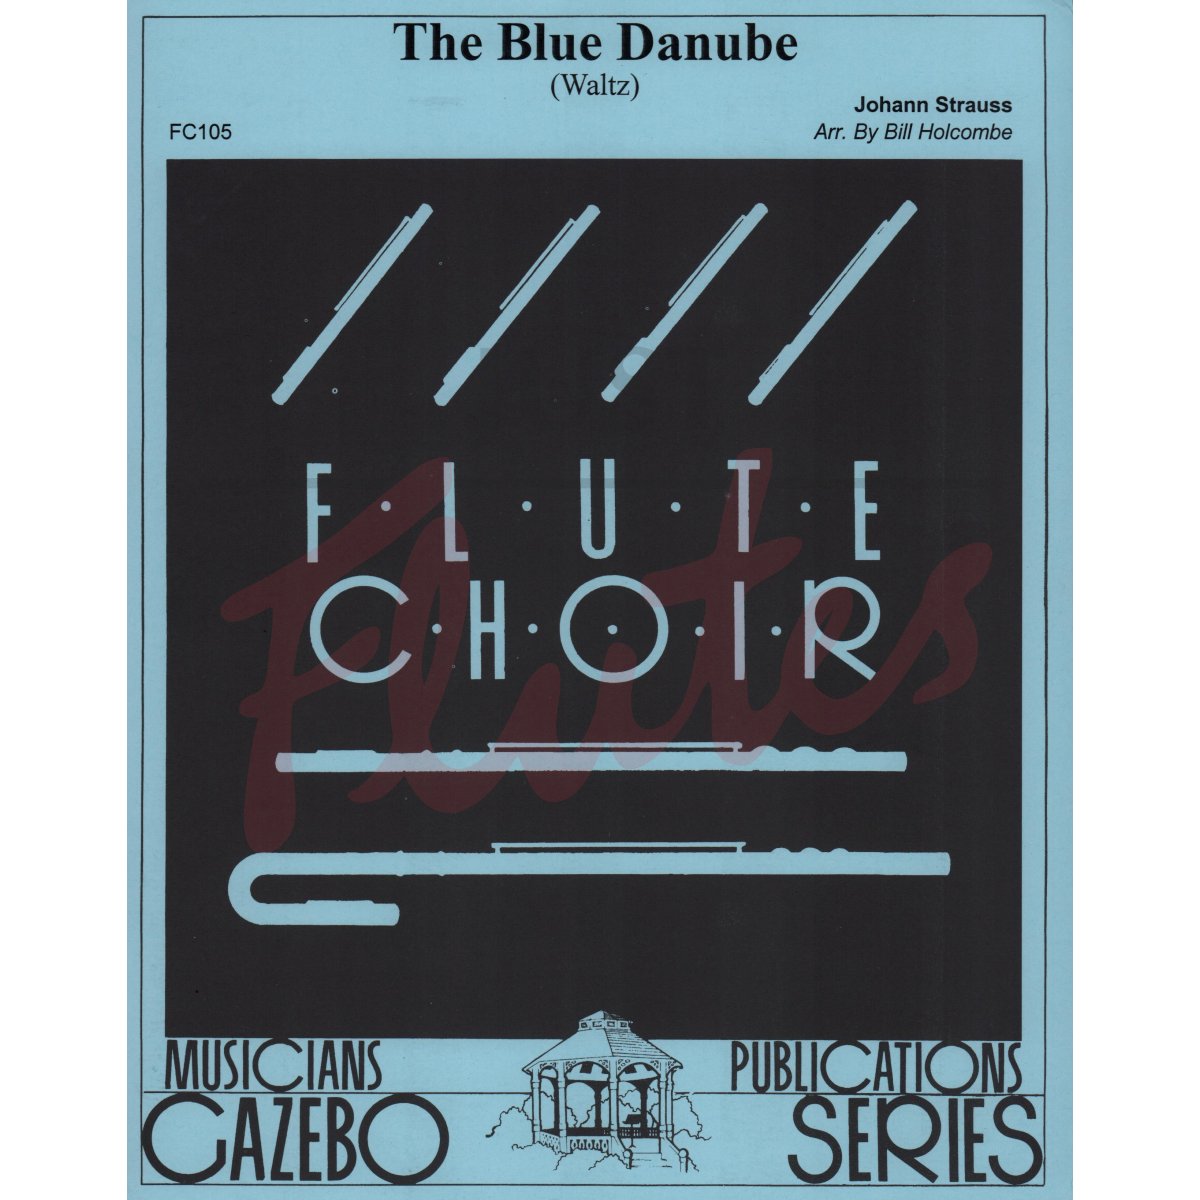 The Blue Danube Waltz for Flute Choir